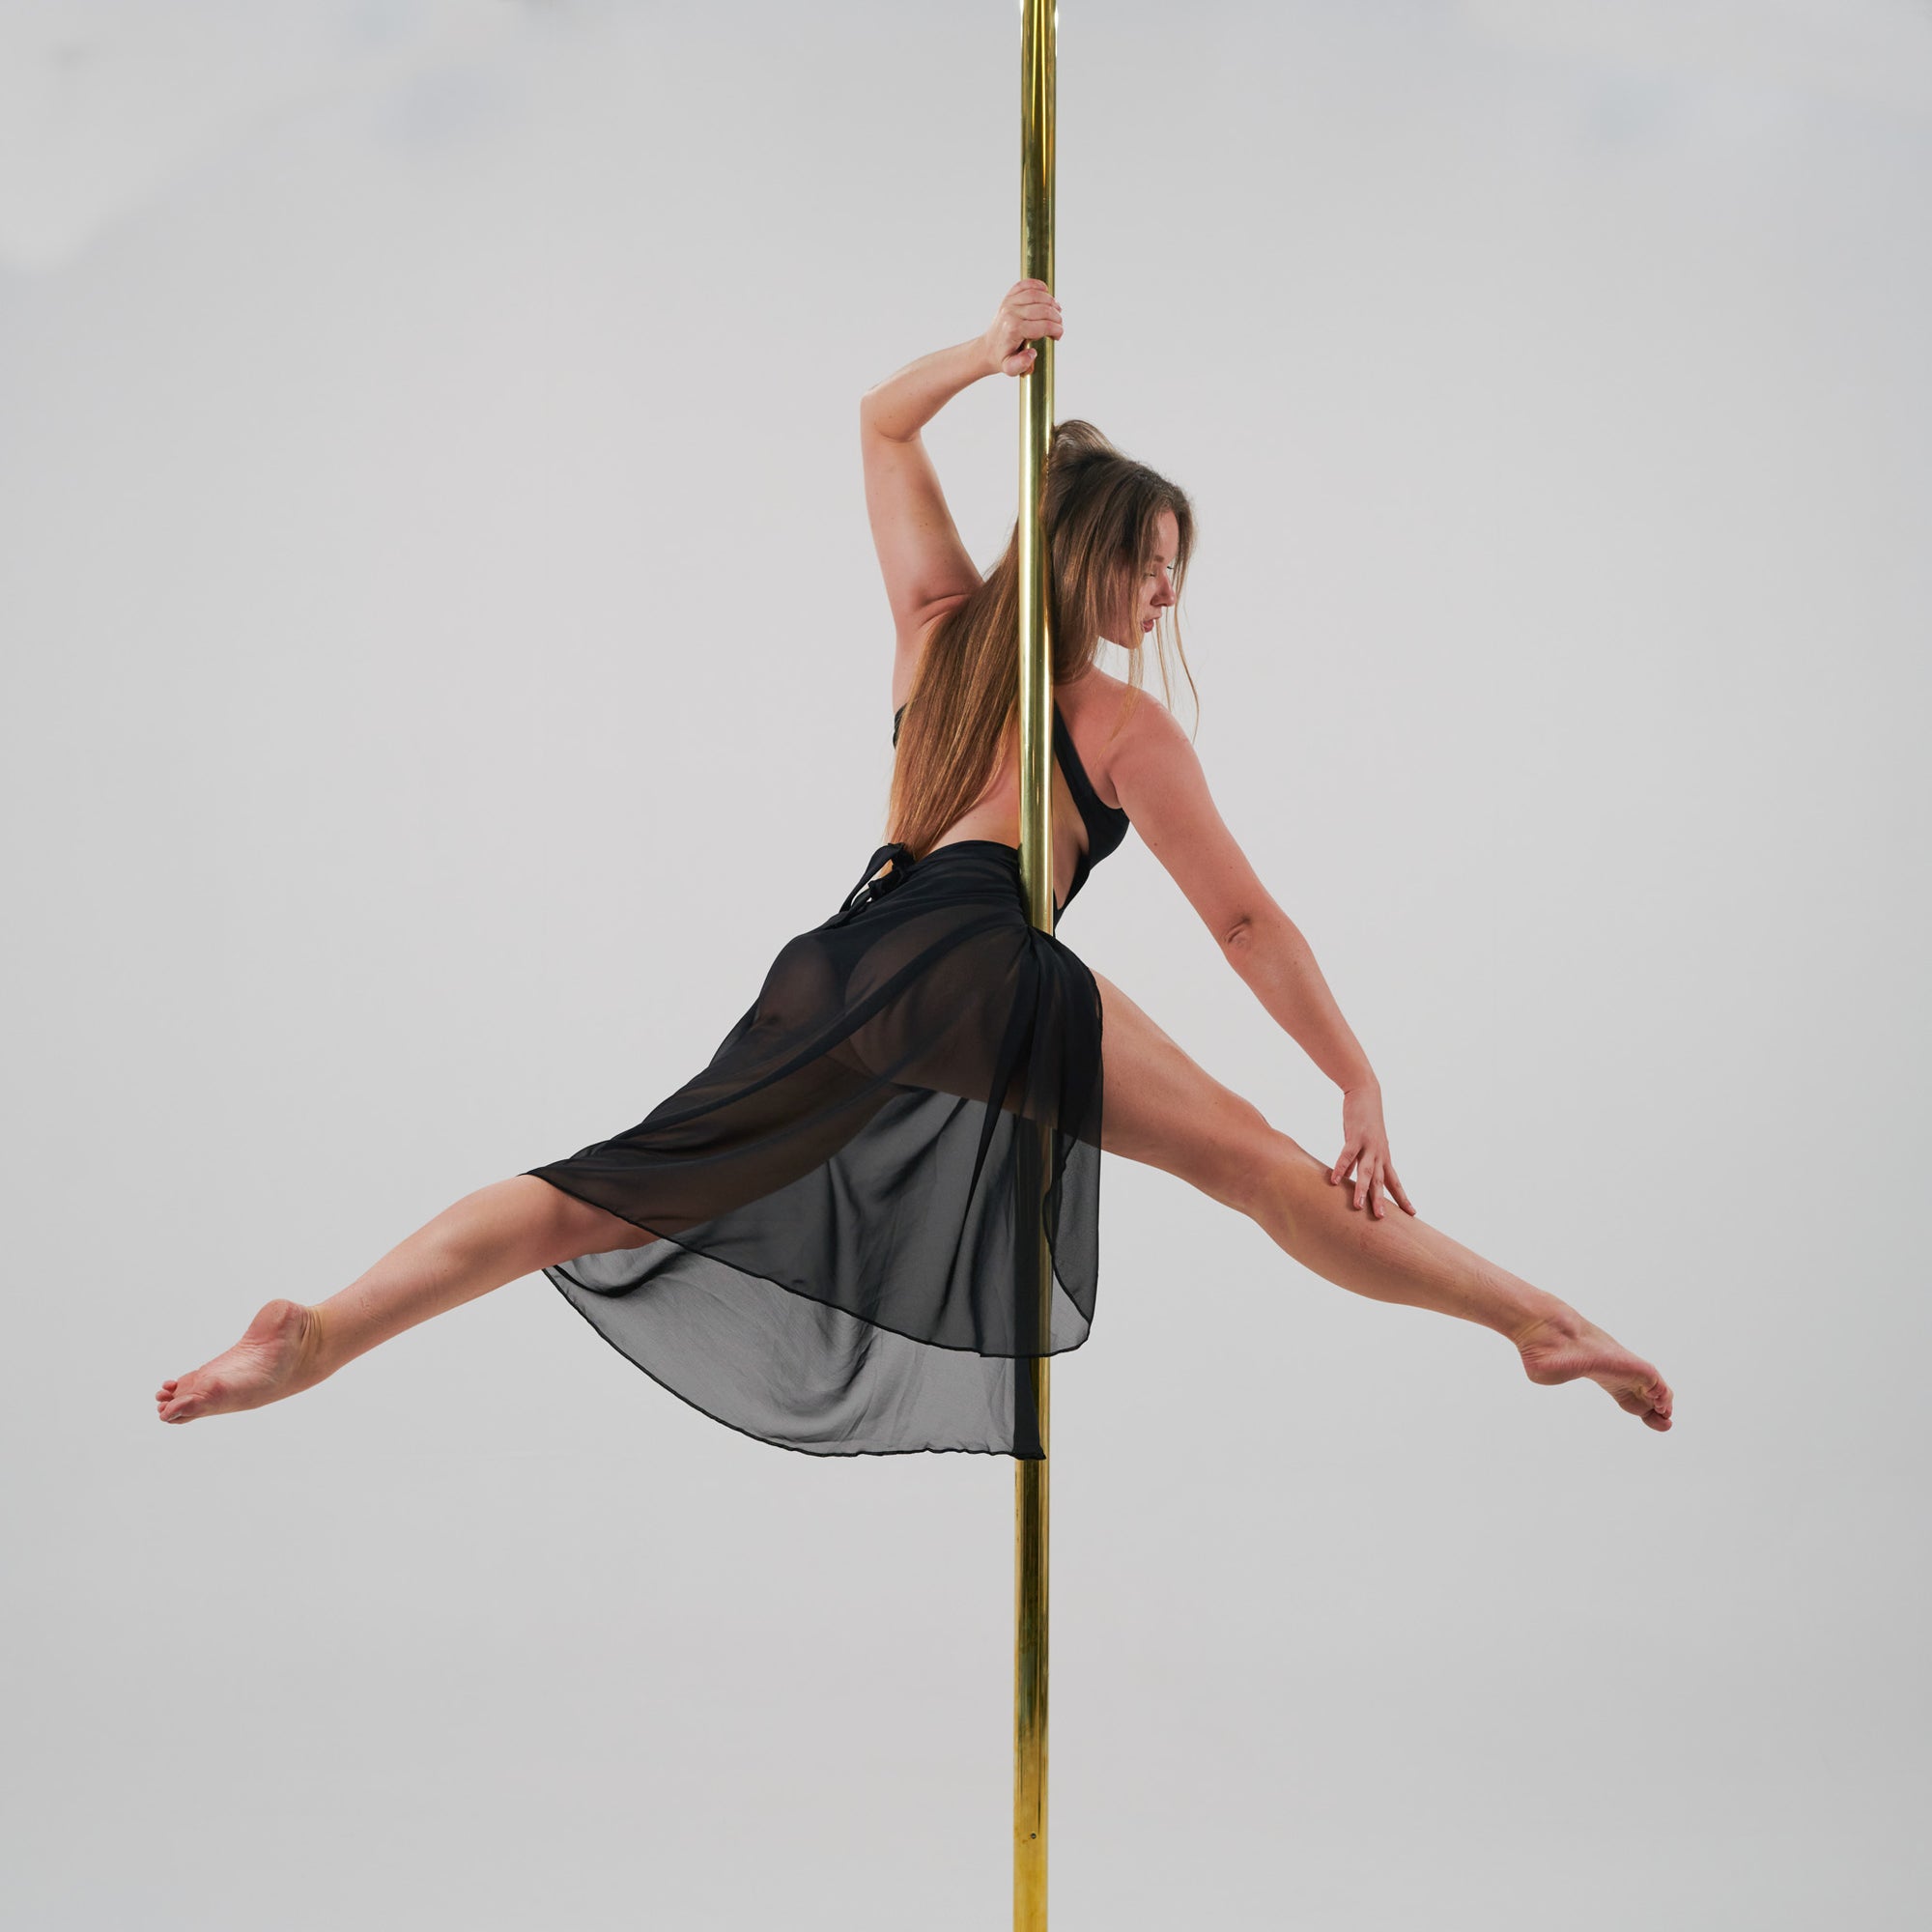 pole dancer in sfh pole wear movement skirt